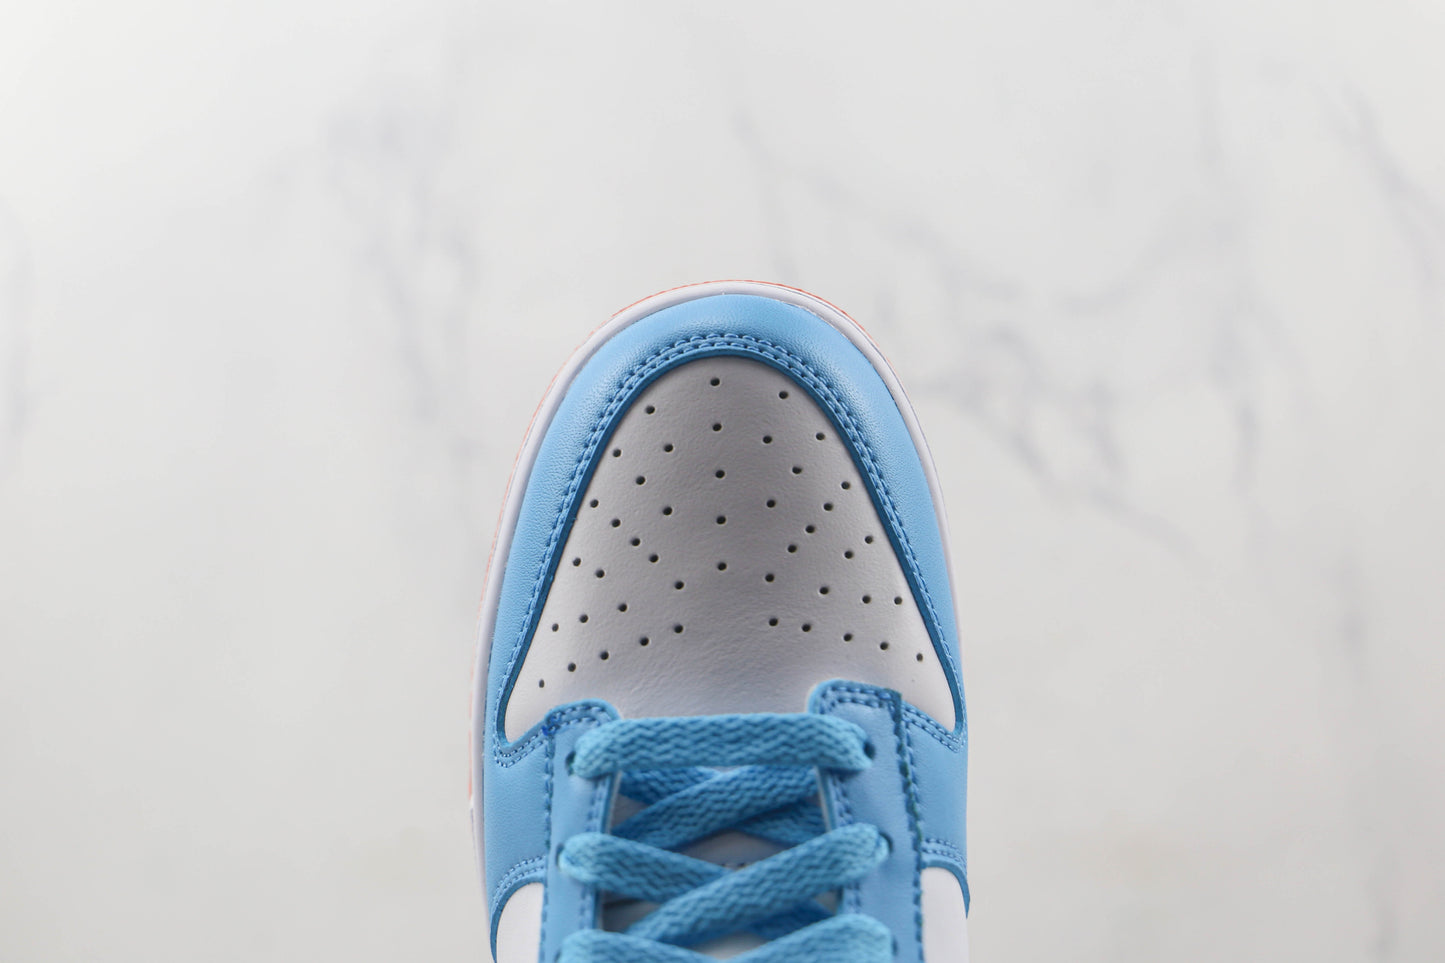 Nike Dunk Low Baltic Blue